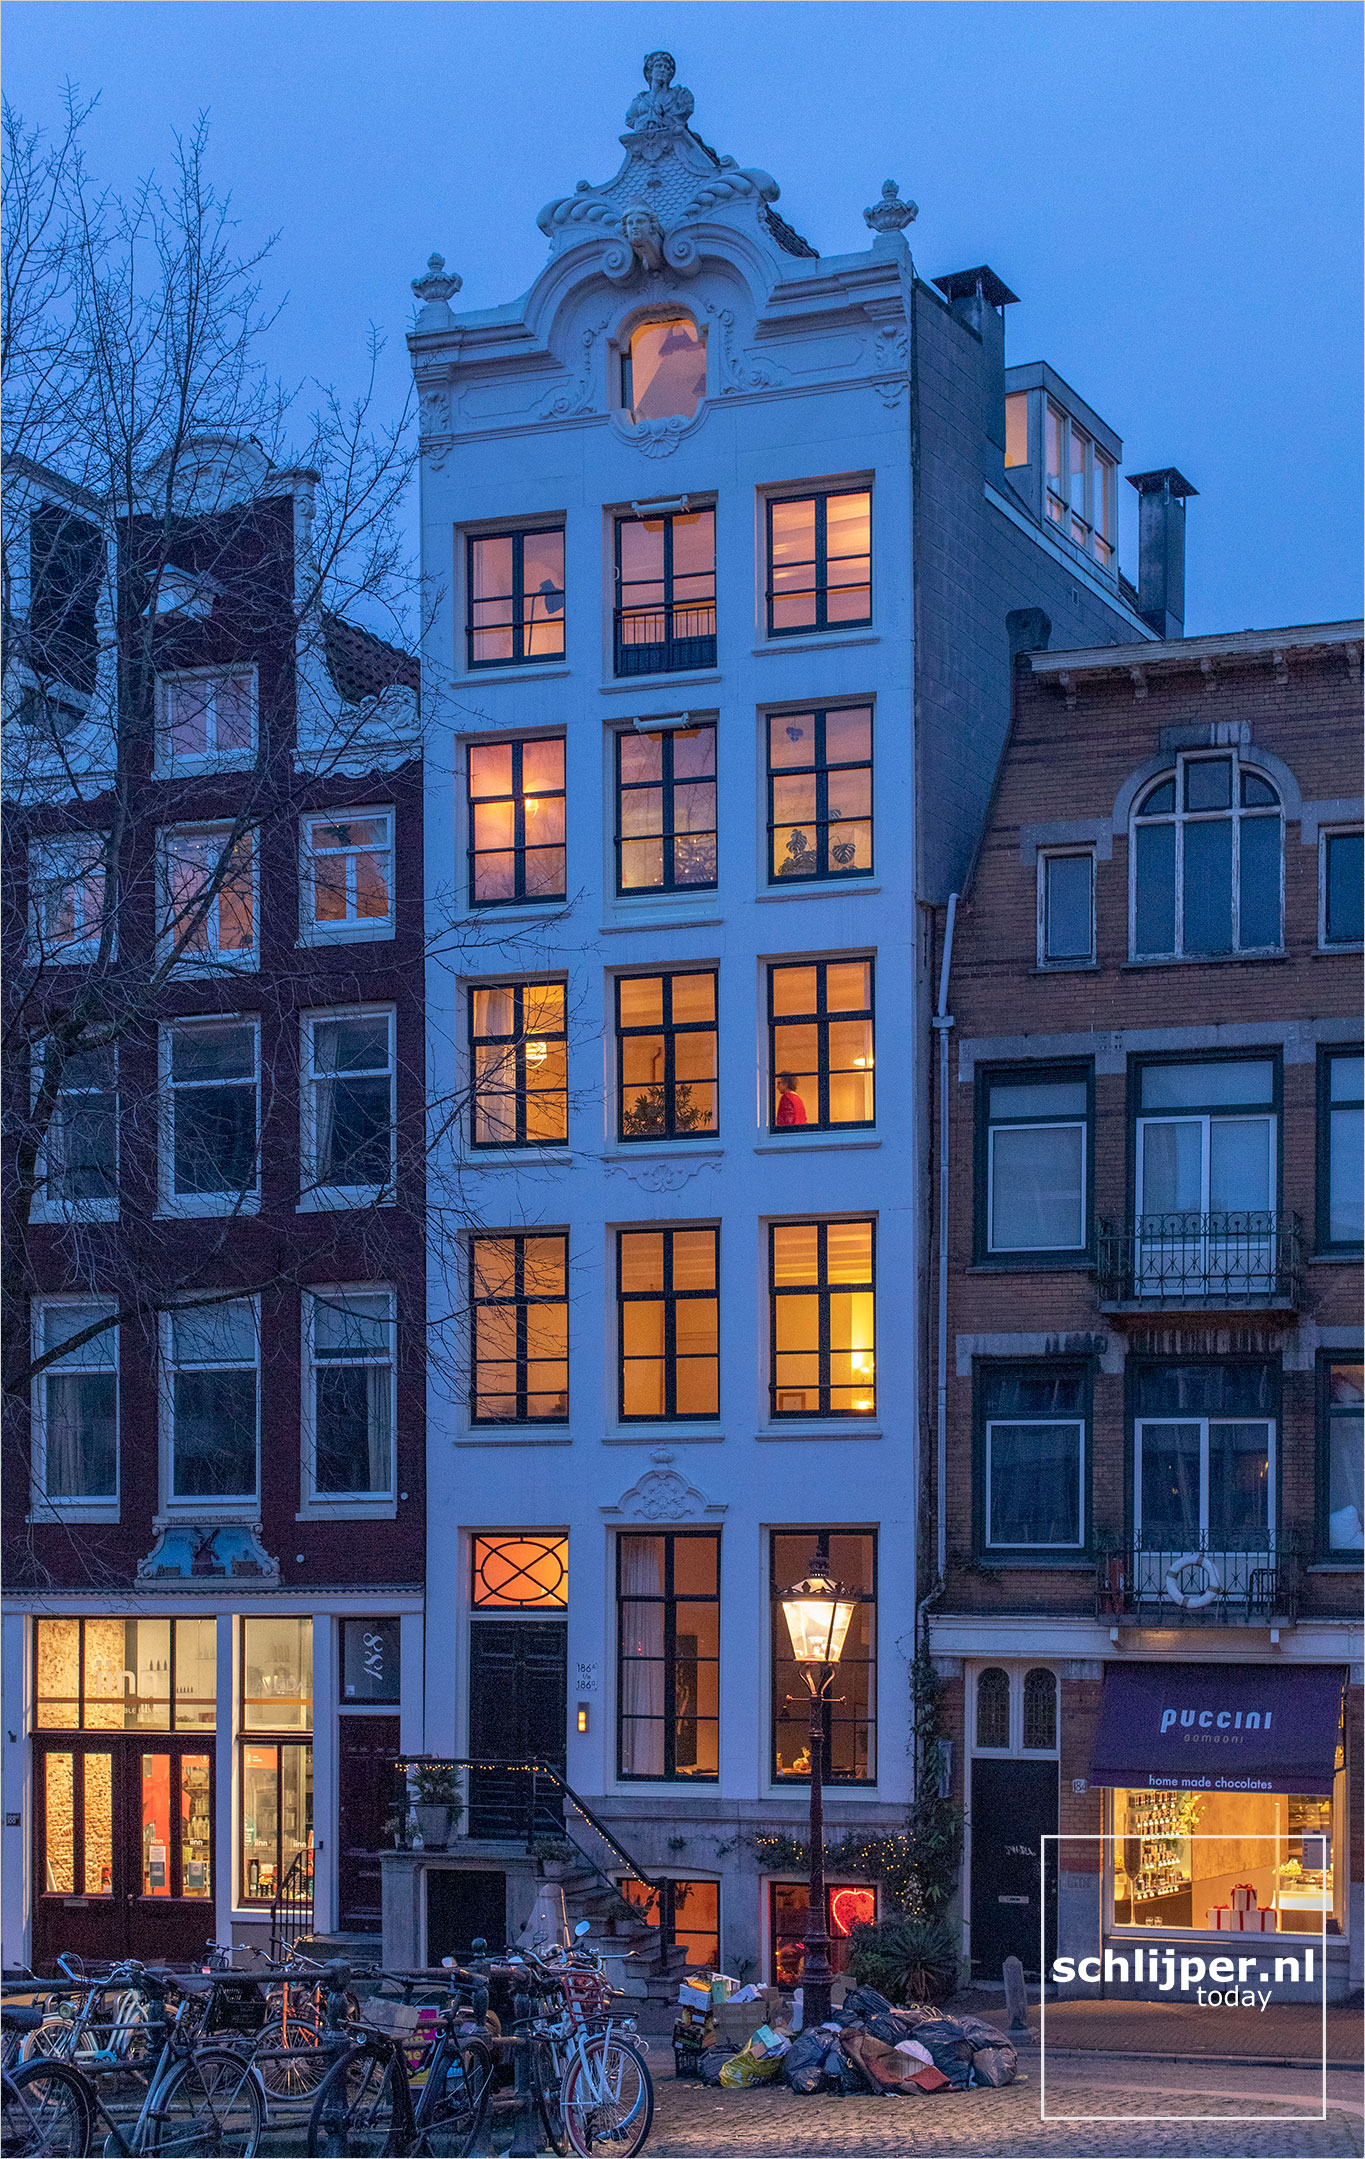 The Netherlands, Amsterdam, 28 december 2020